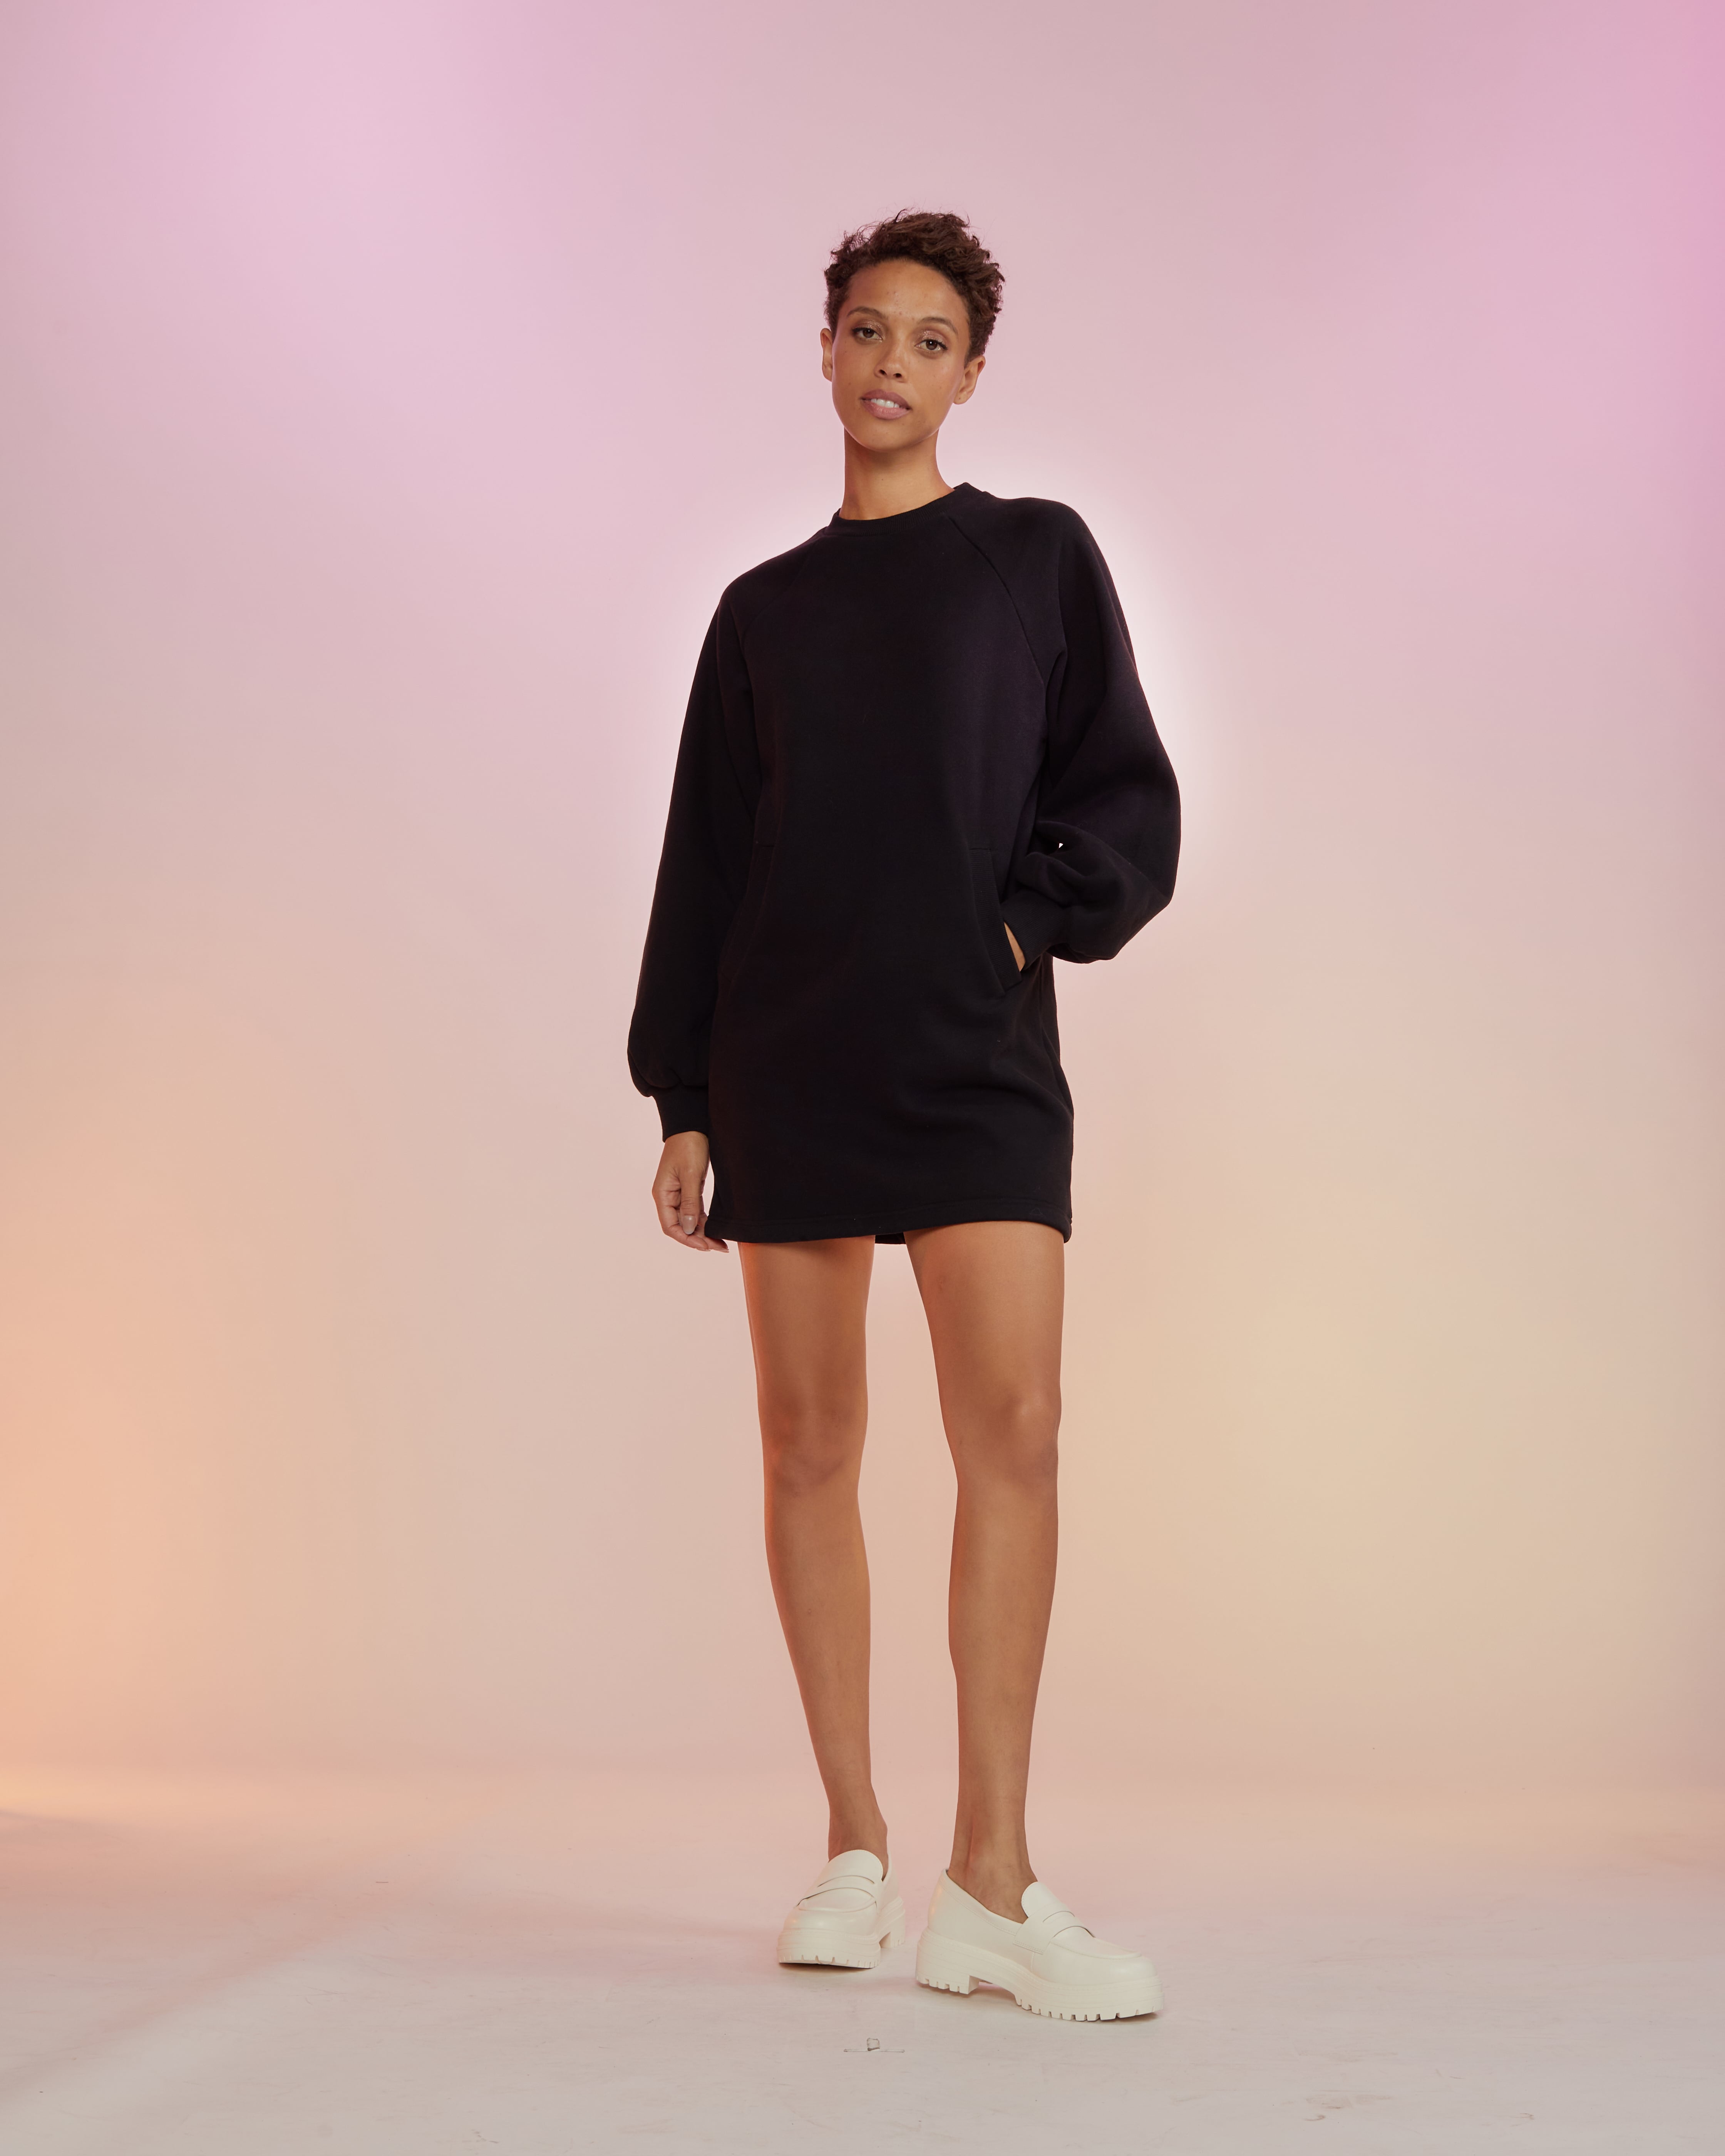 Cynthia Rowley x Amazon The Drop Collection 2022 | POPSUGAR Fashion